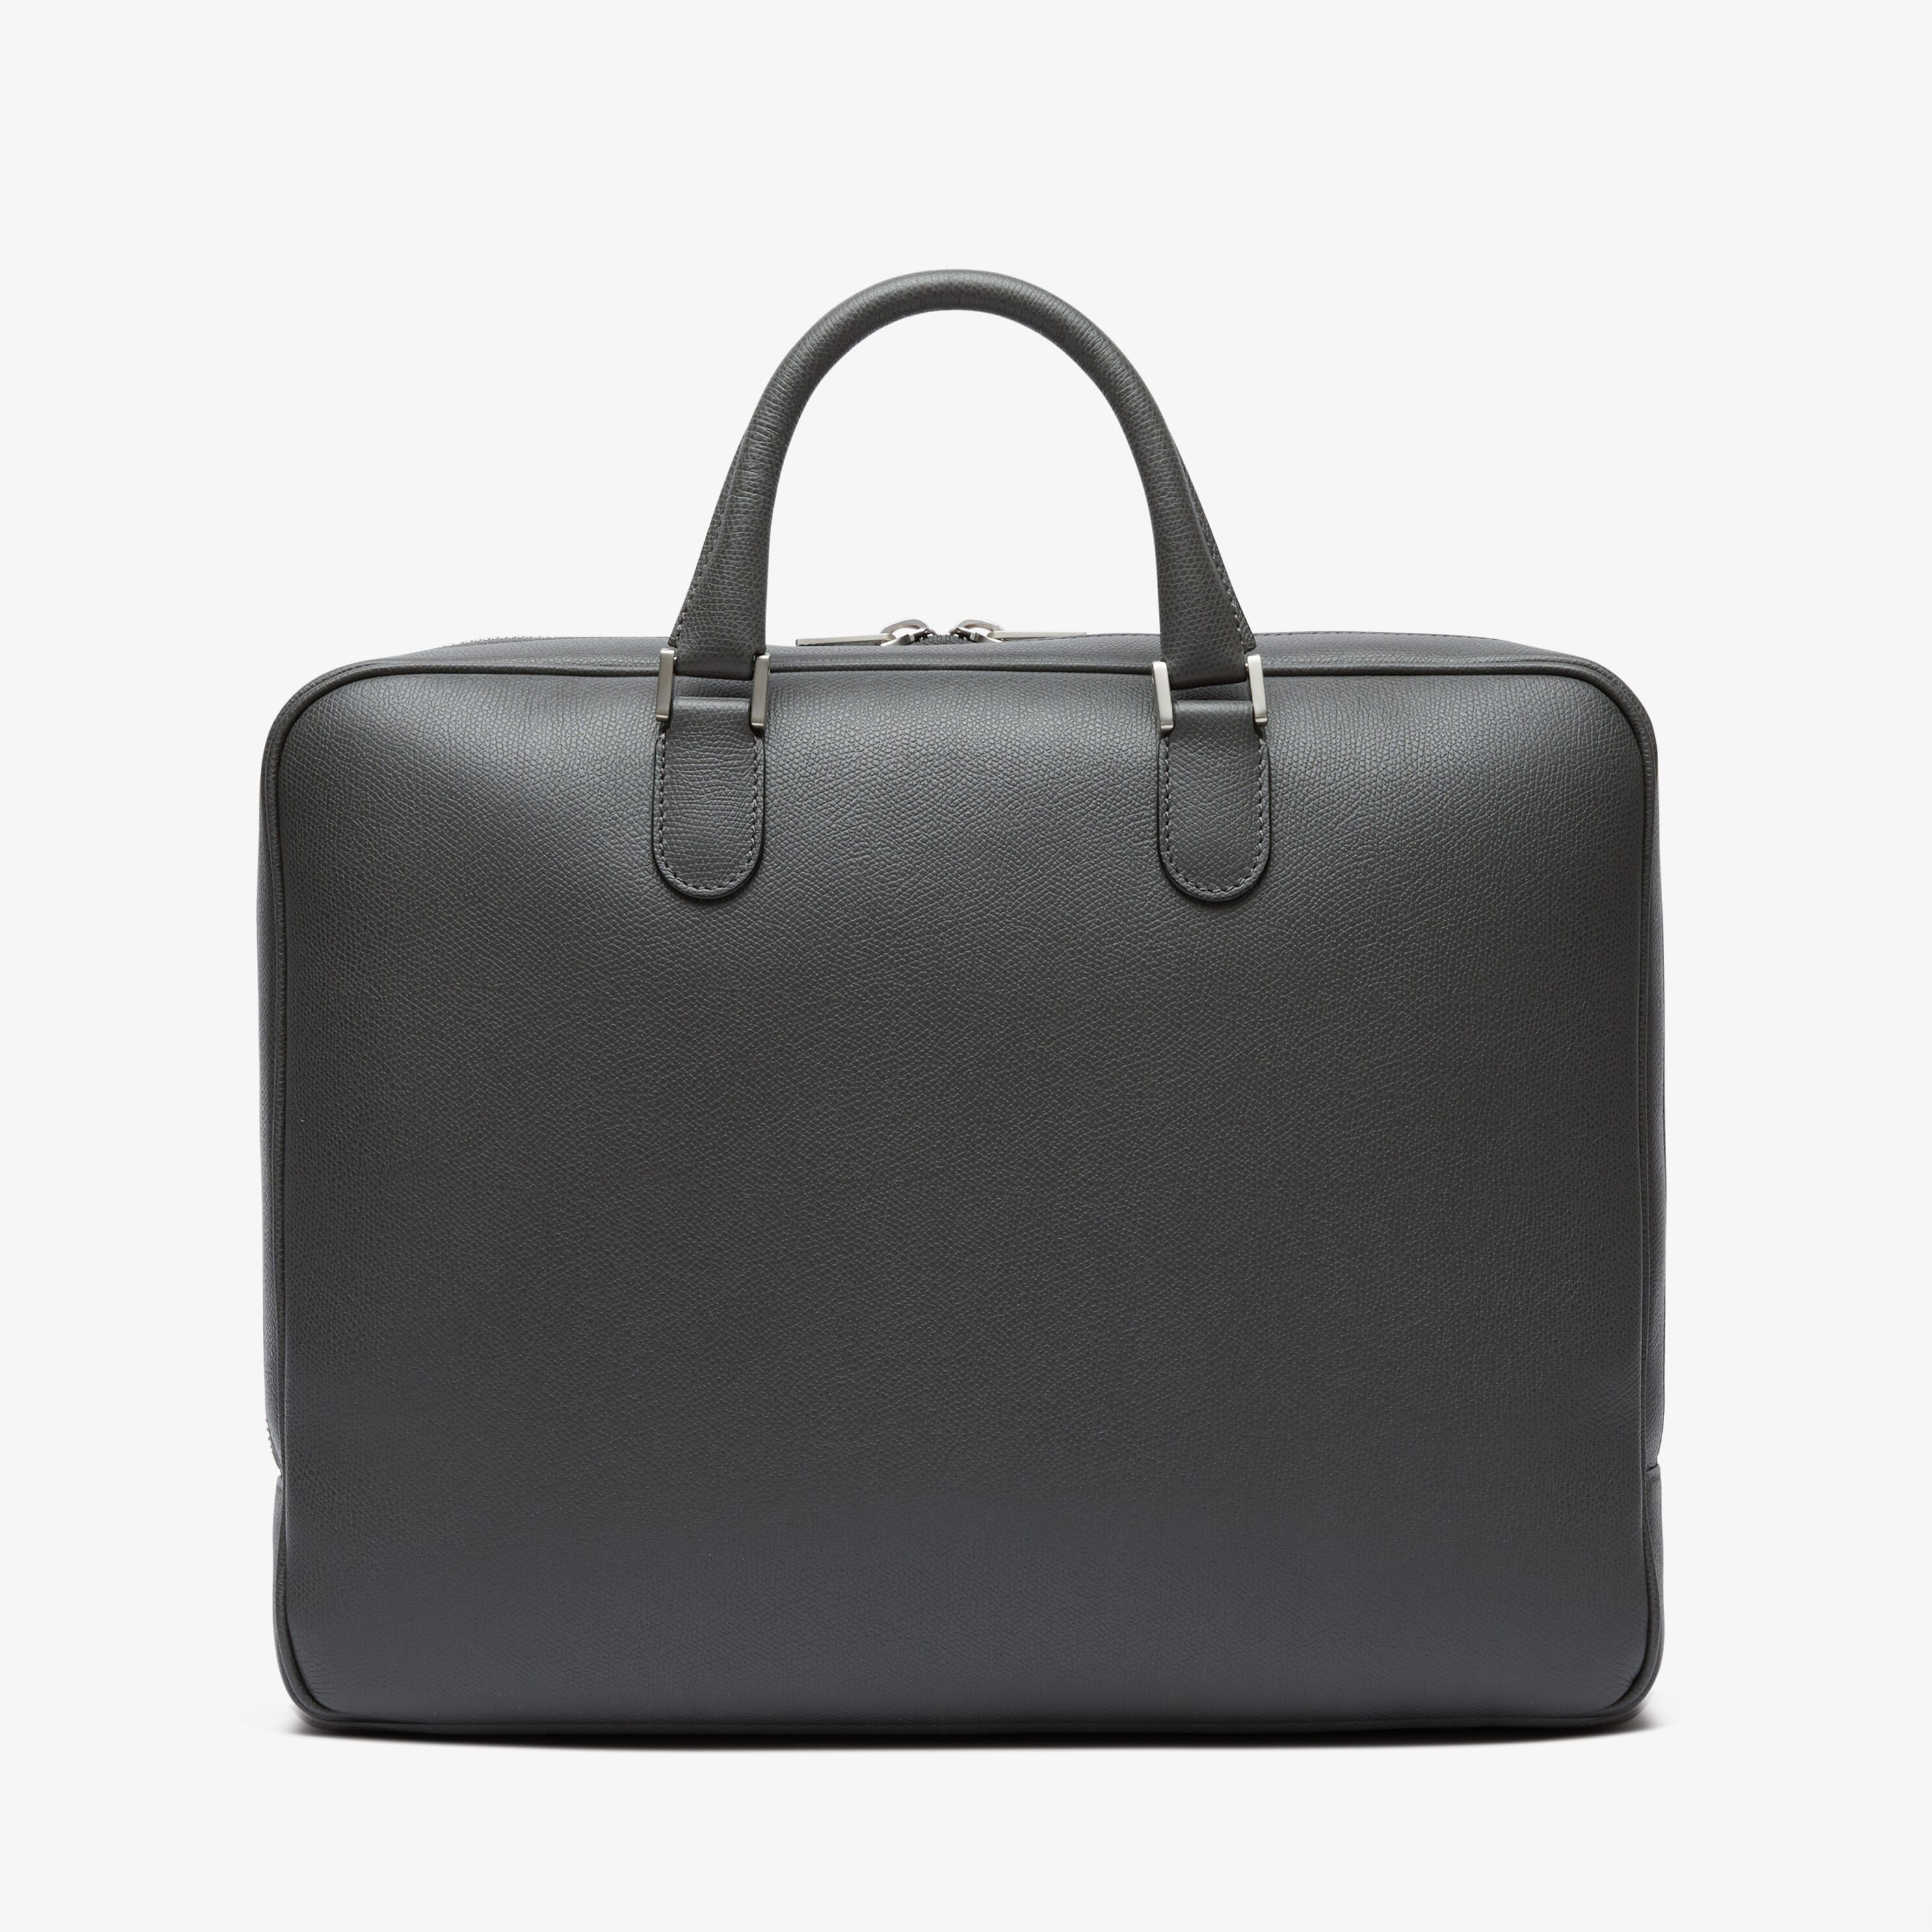 Avietta Briefcase with Zip 24h - Smokey Grey - Vitello VS - Valextra - 6